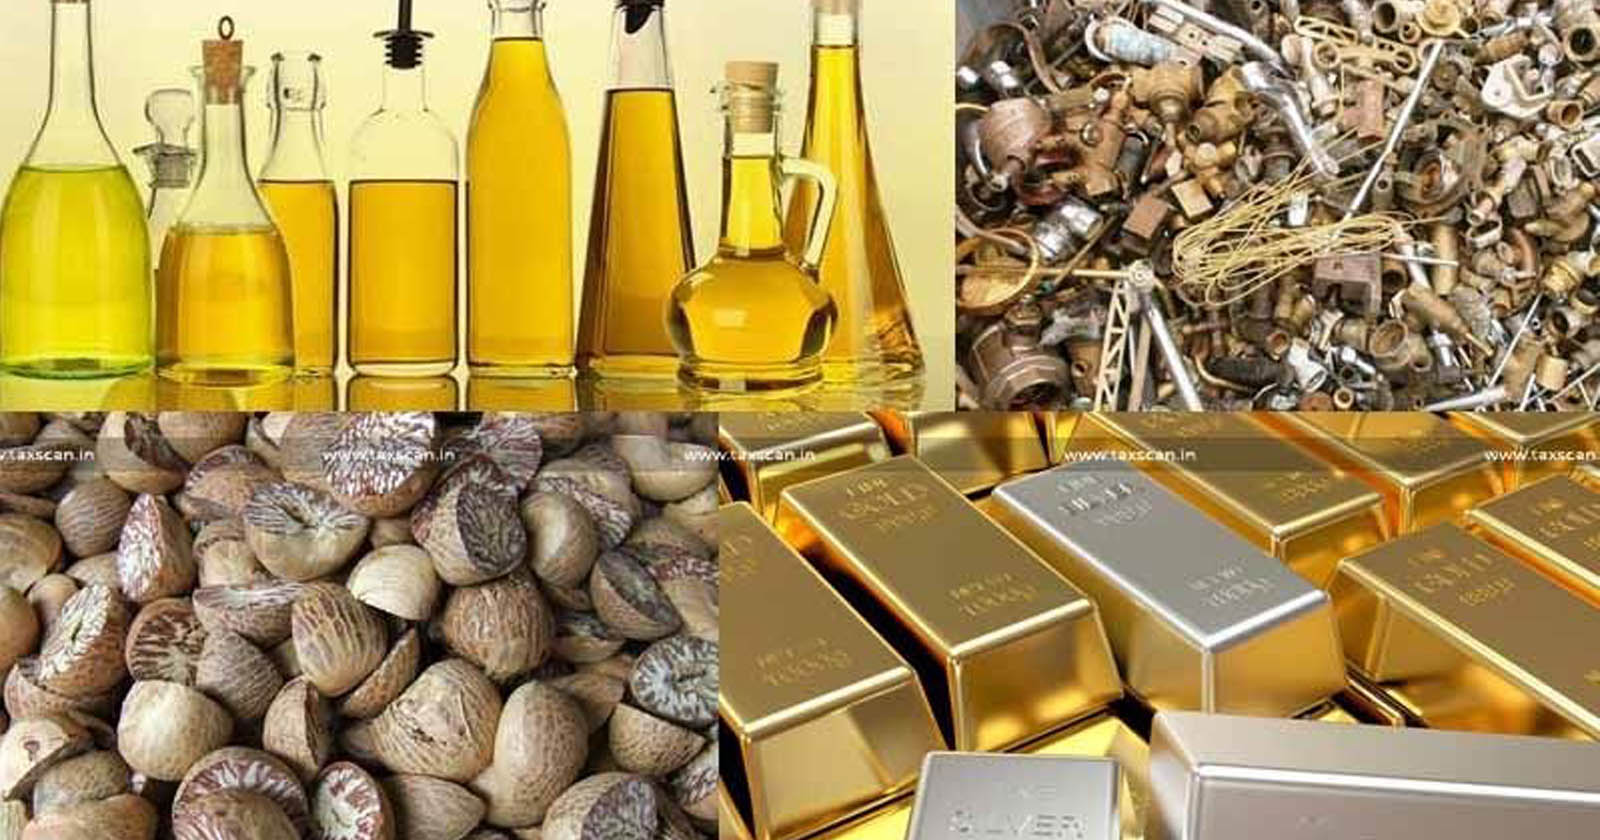 CBIC - CBIC notifies - Tariff Value - Edible Oils - Brass Scrap - Areca Nut - Gold - Silver - Customs - Taxscan